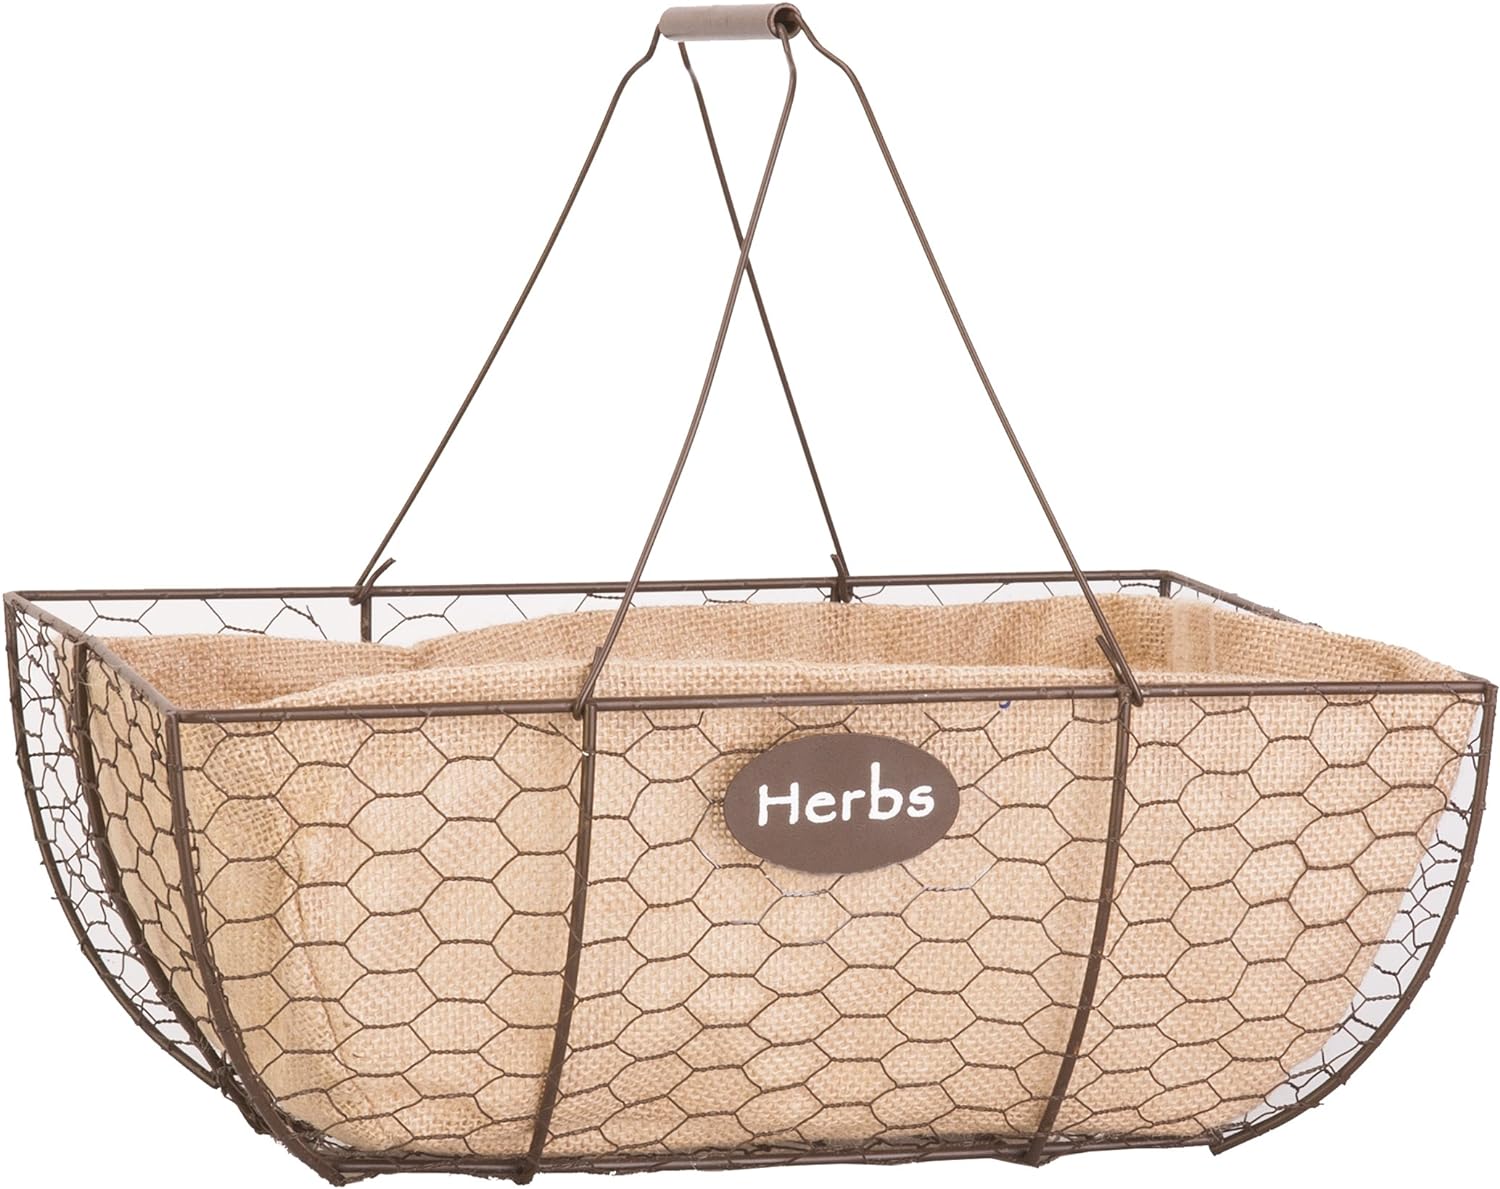 Rustic Herb Basket with Burlap Liner